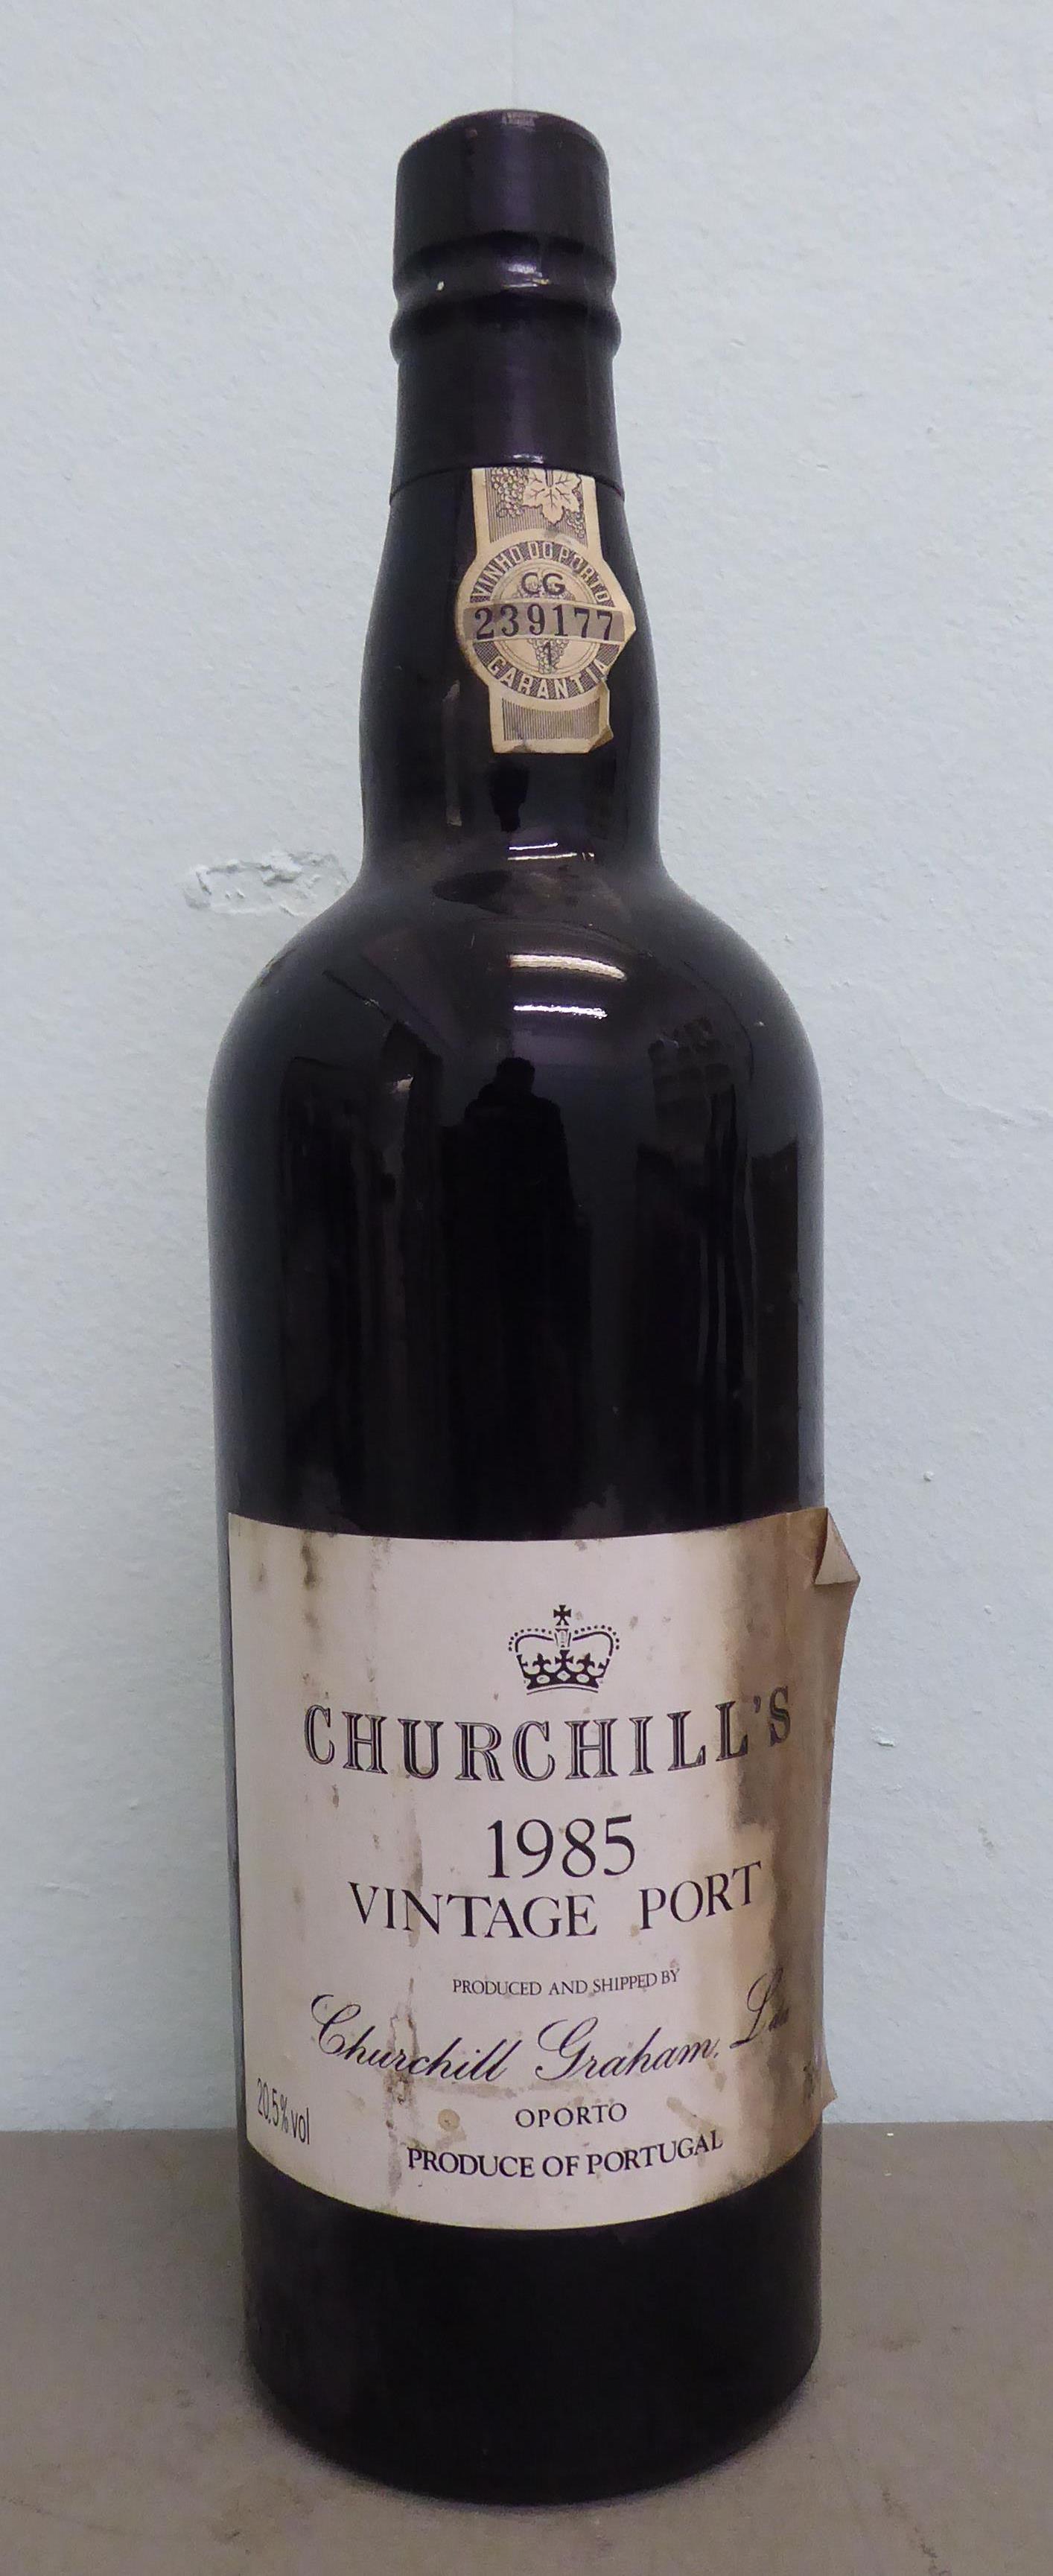 A bottle of Churchill's vintage Port 1985